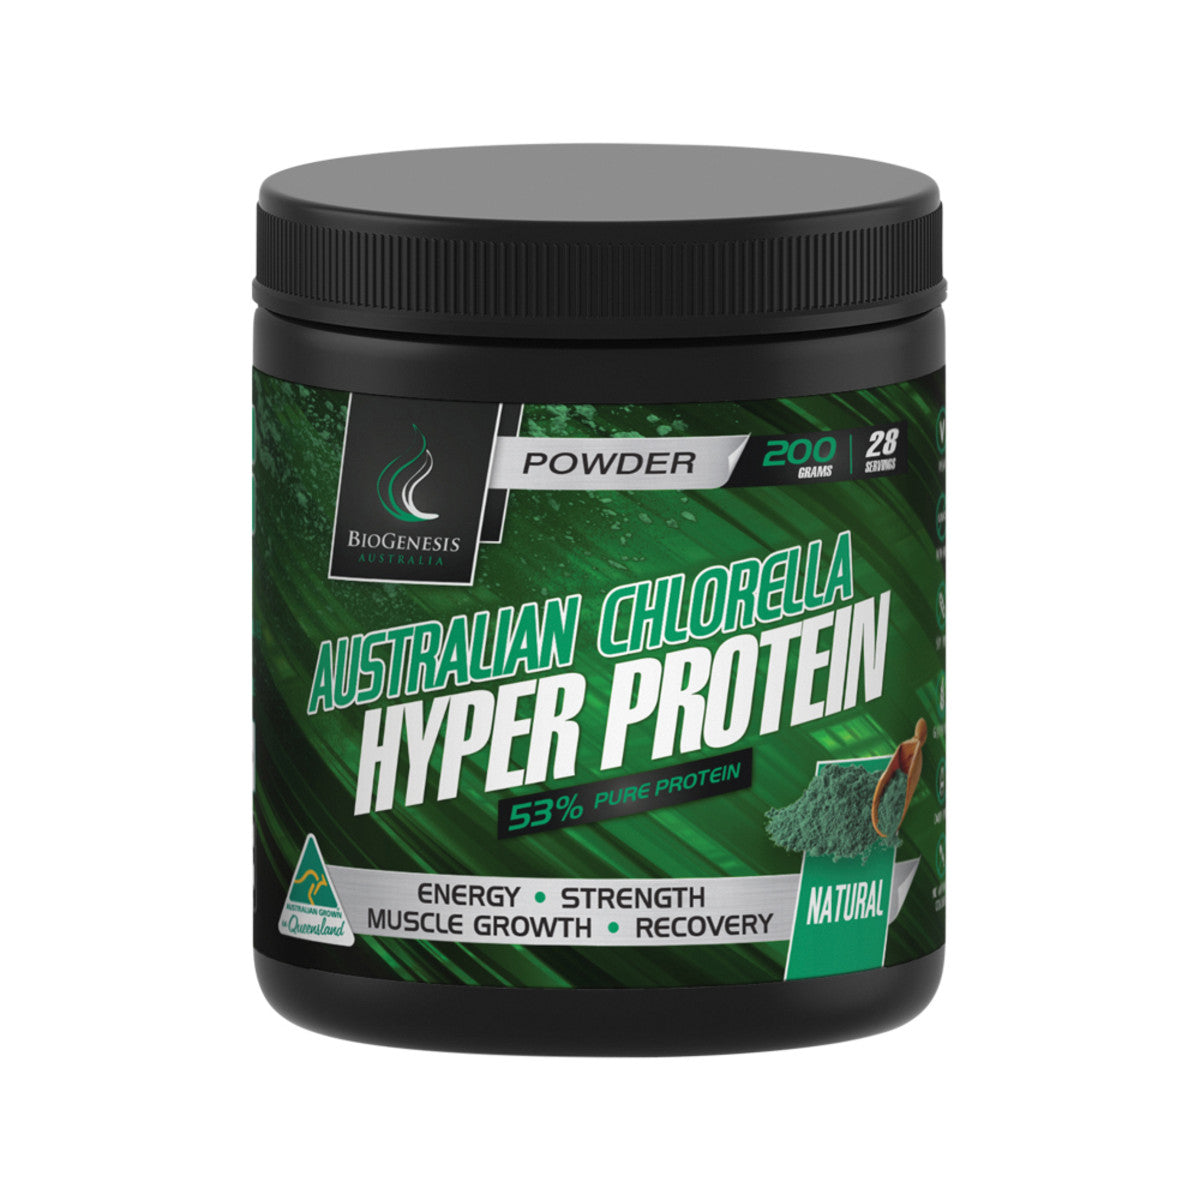 BioGenesis - Australian Chlorella Hyper Protein Natural Powder